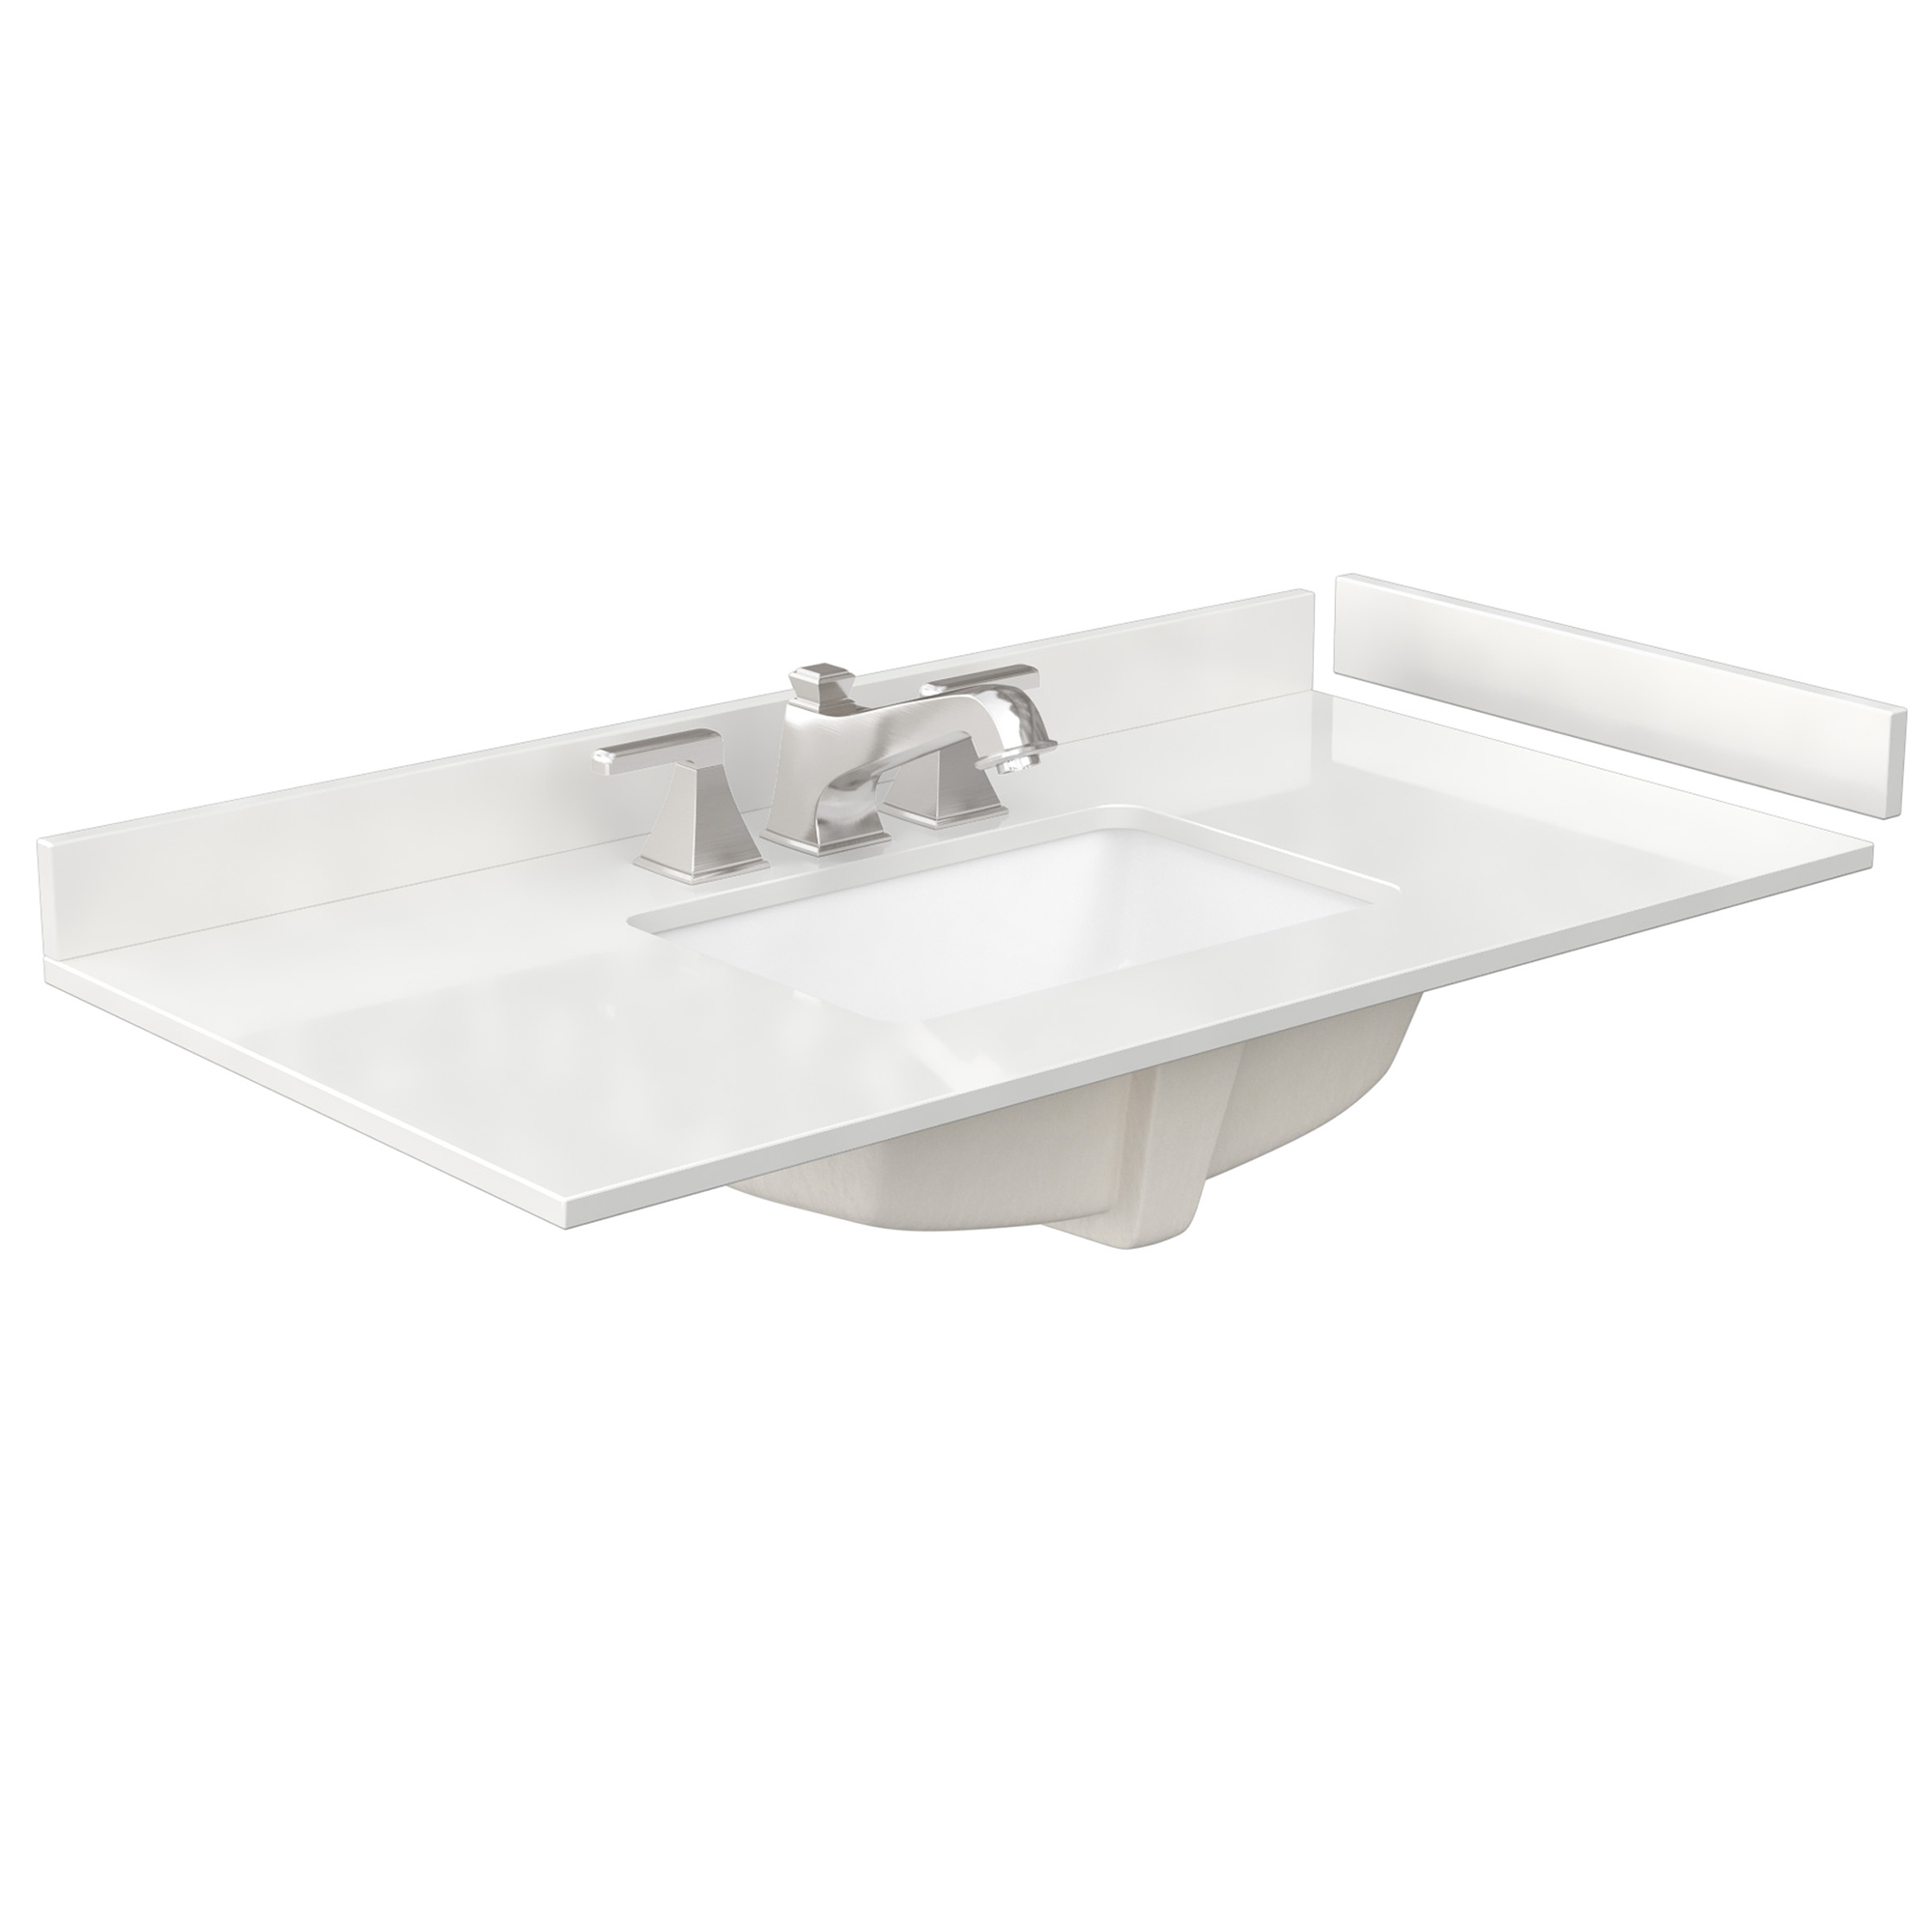 42" Single Countertop - White Quartz (1000) with Undermount Square Sink (3-Hole) - Includes Backsplash and Sidesplash WCFQC342STOPUNSWQ